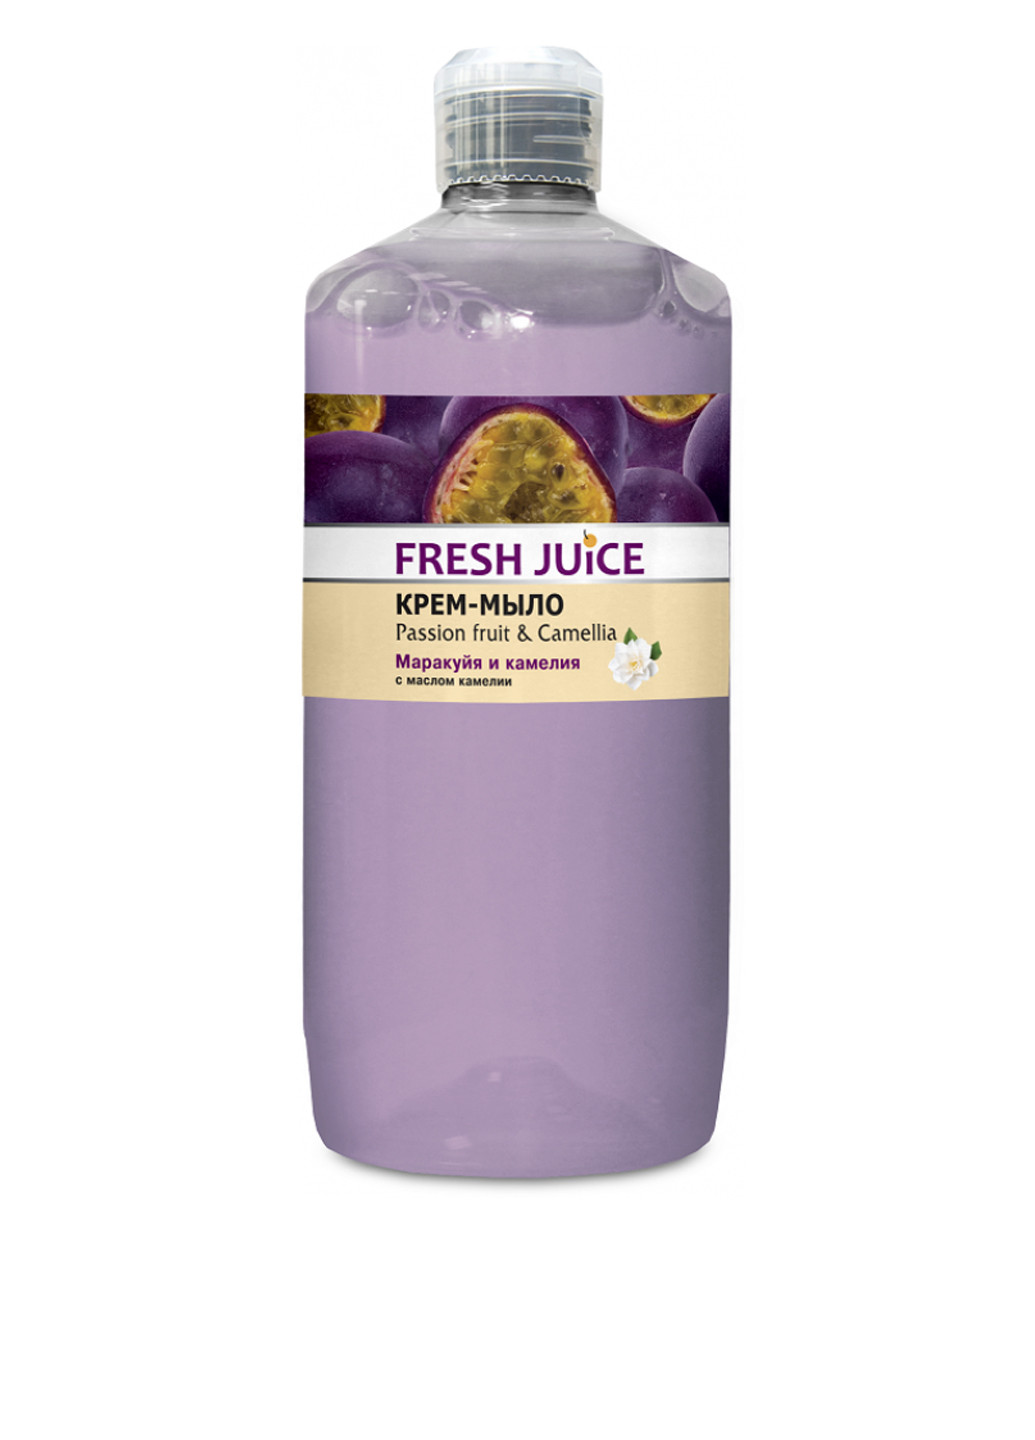 Крем-мыло Fruit & Camellia, 1 л. Fresh Juice (151220114)